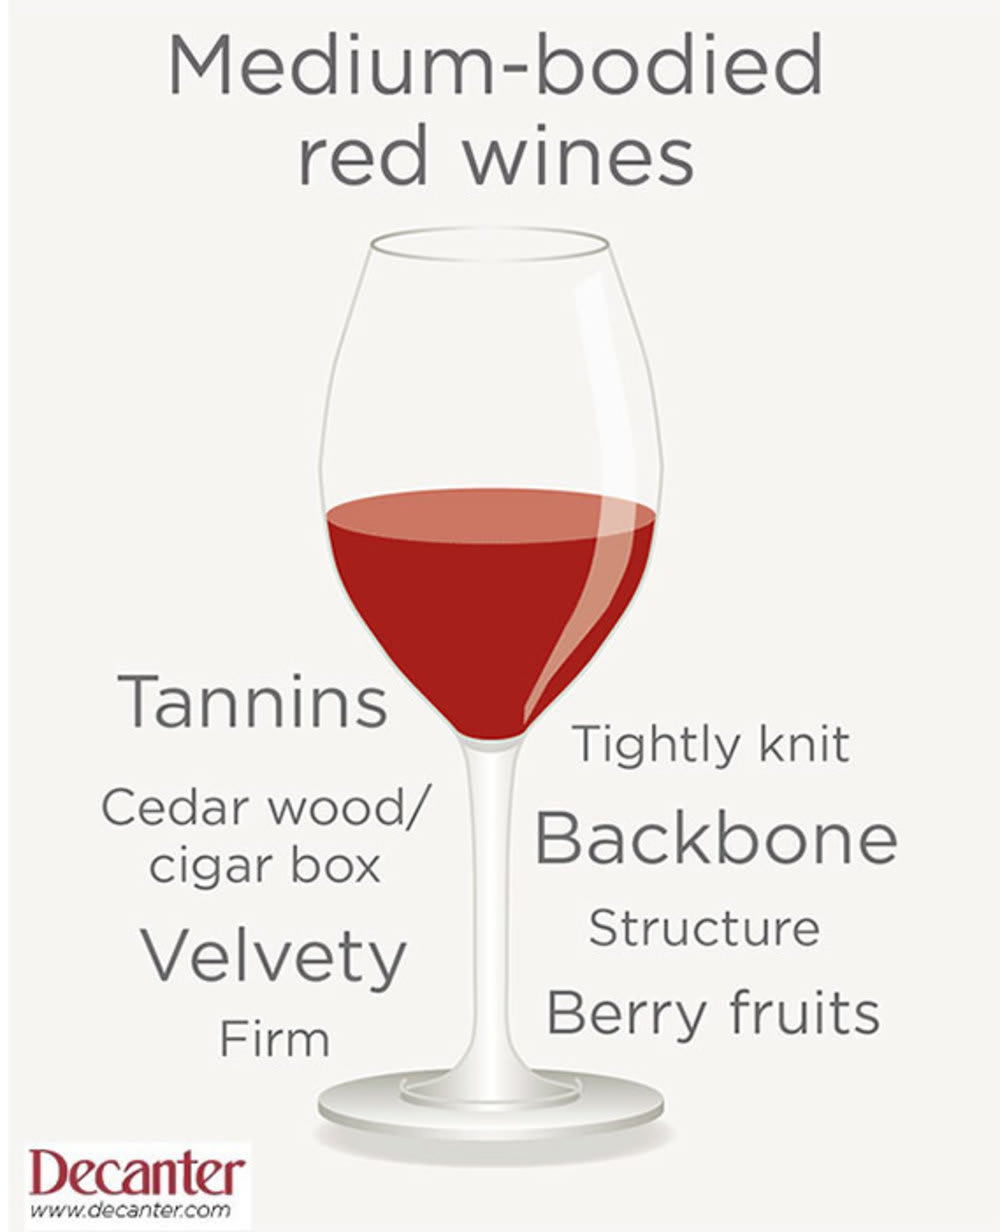 Medium-bodied red wines